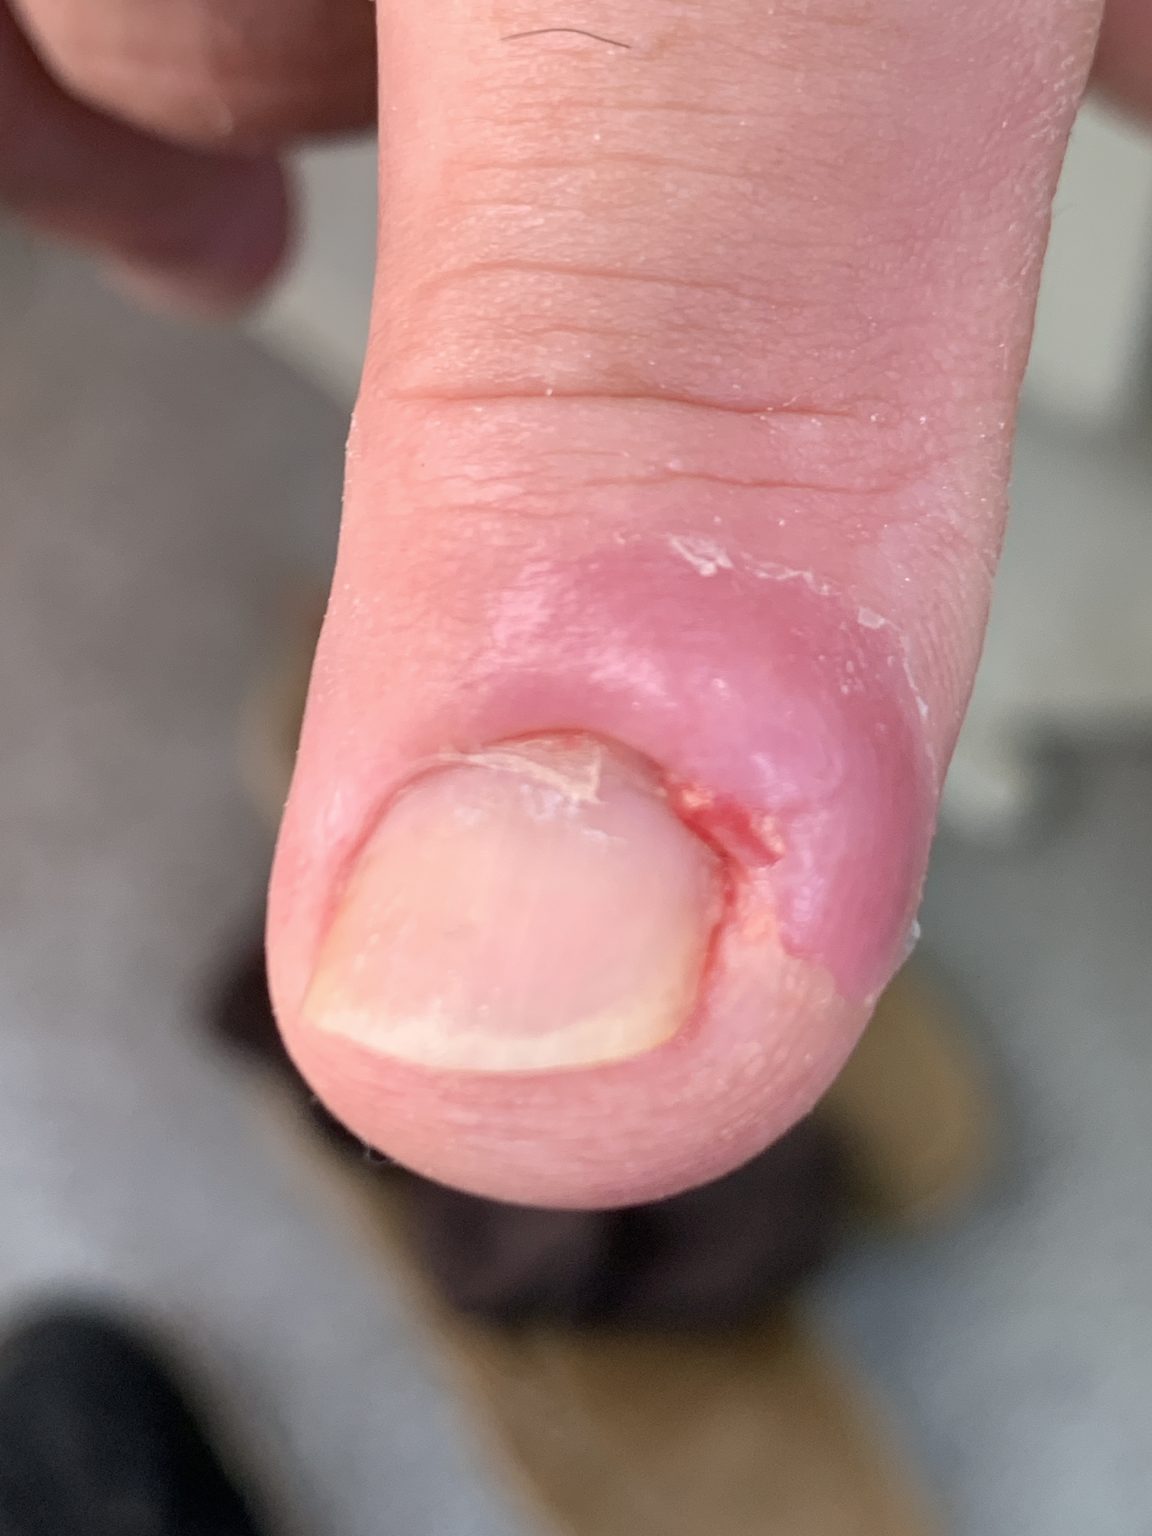 Fingernail infection & wart | A&A Podiatrists & Chiropodists